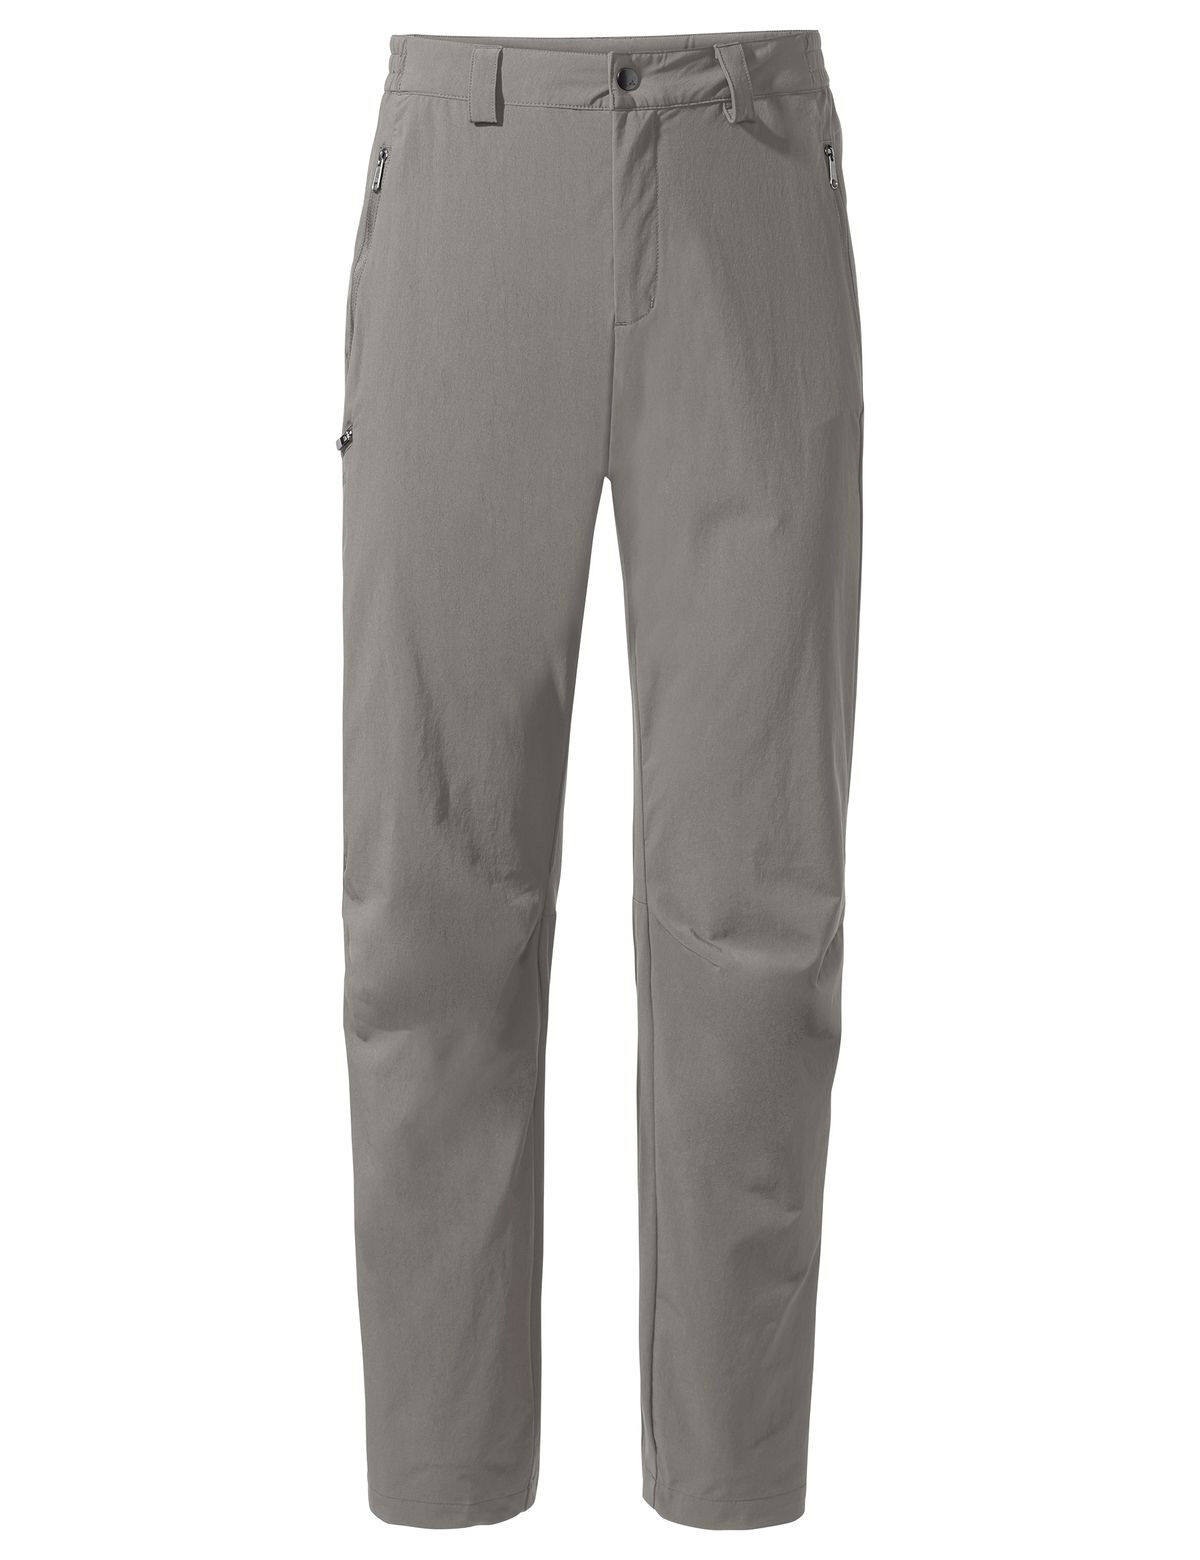 Vaude Farley Stretch Pants III - Walking trousers - Men's